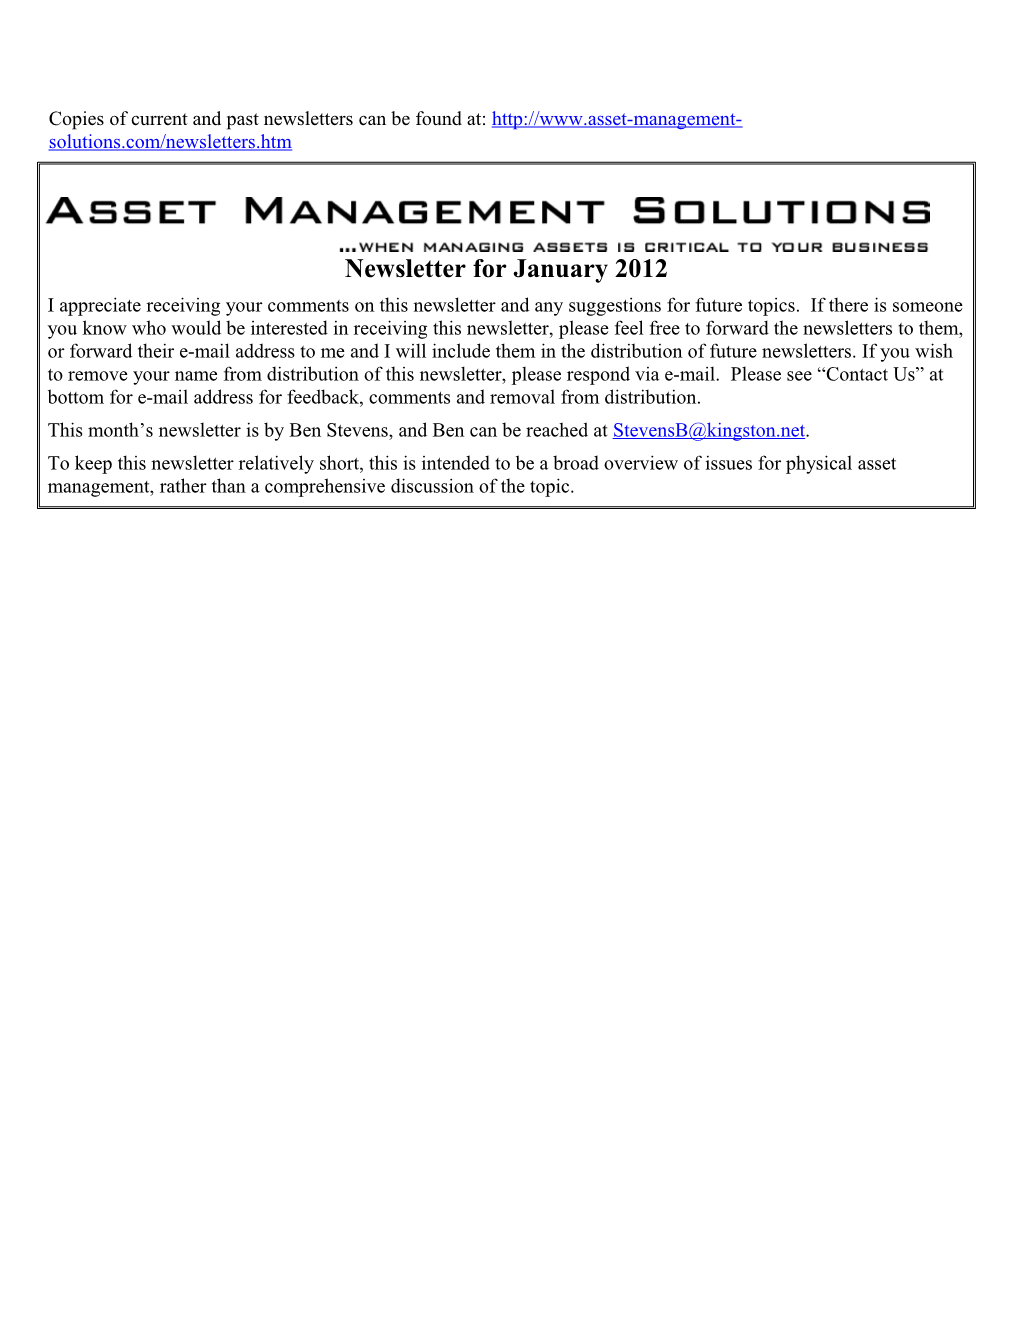 Asset Management Solutions Newsletter for January 2012